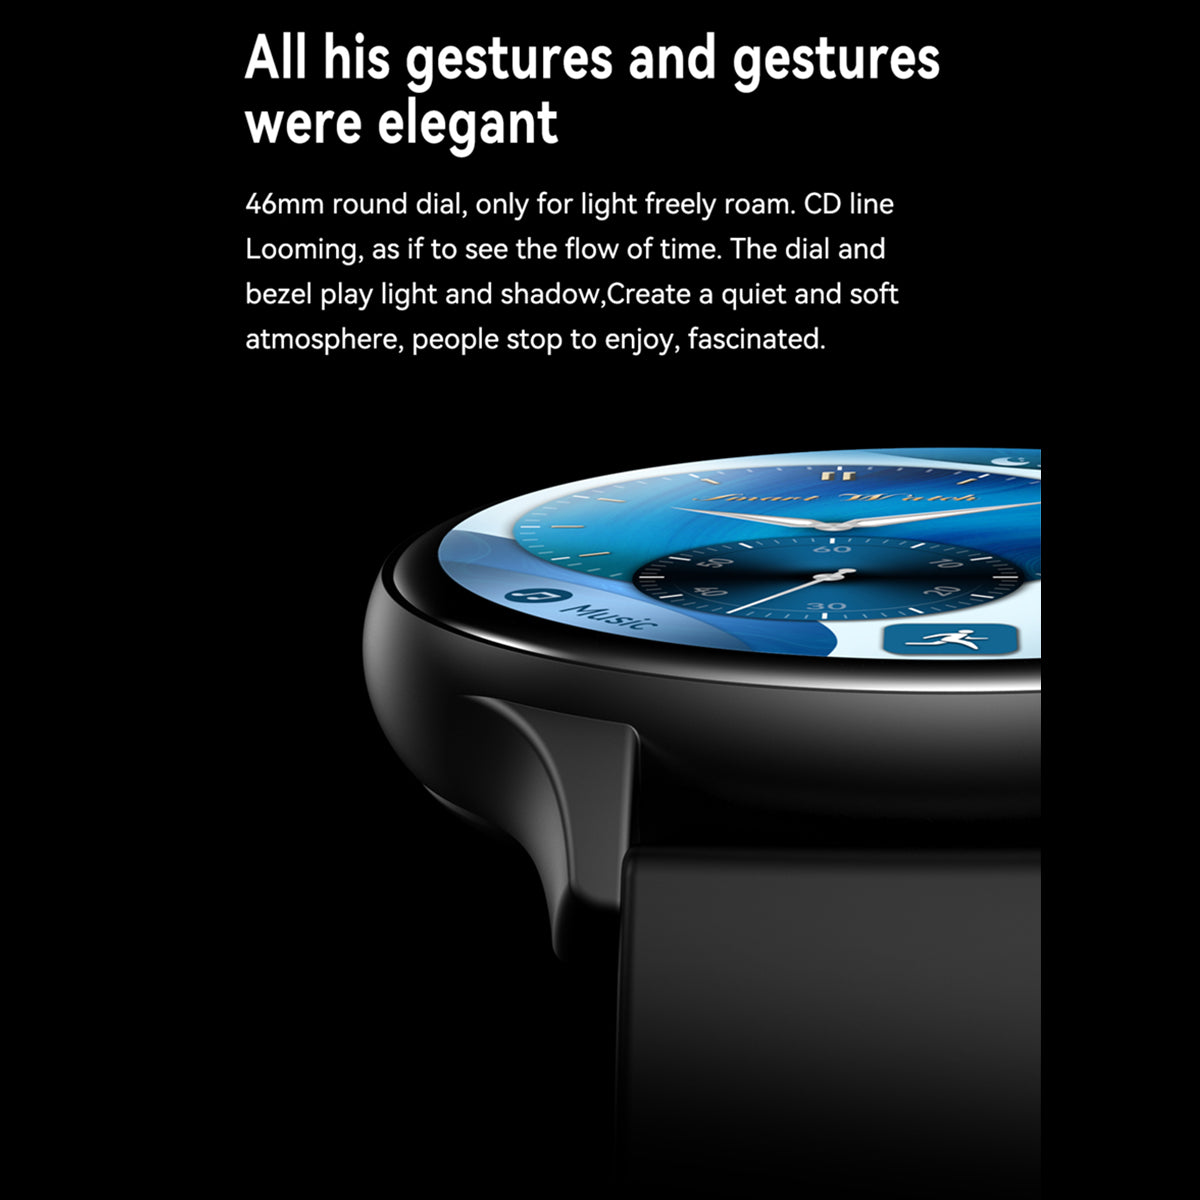 Reloj Smartwatch Hk89 Fralugio Amoled Full Touch 1.43´ Nfc